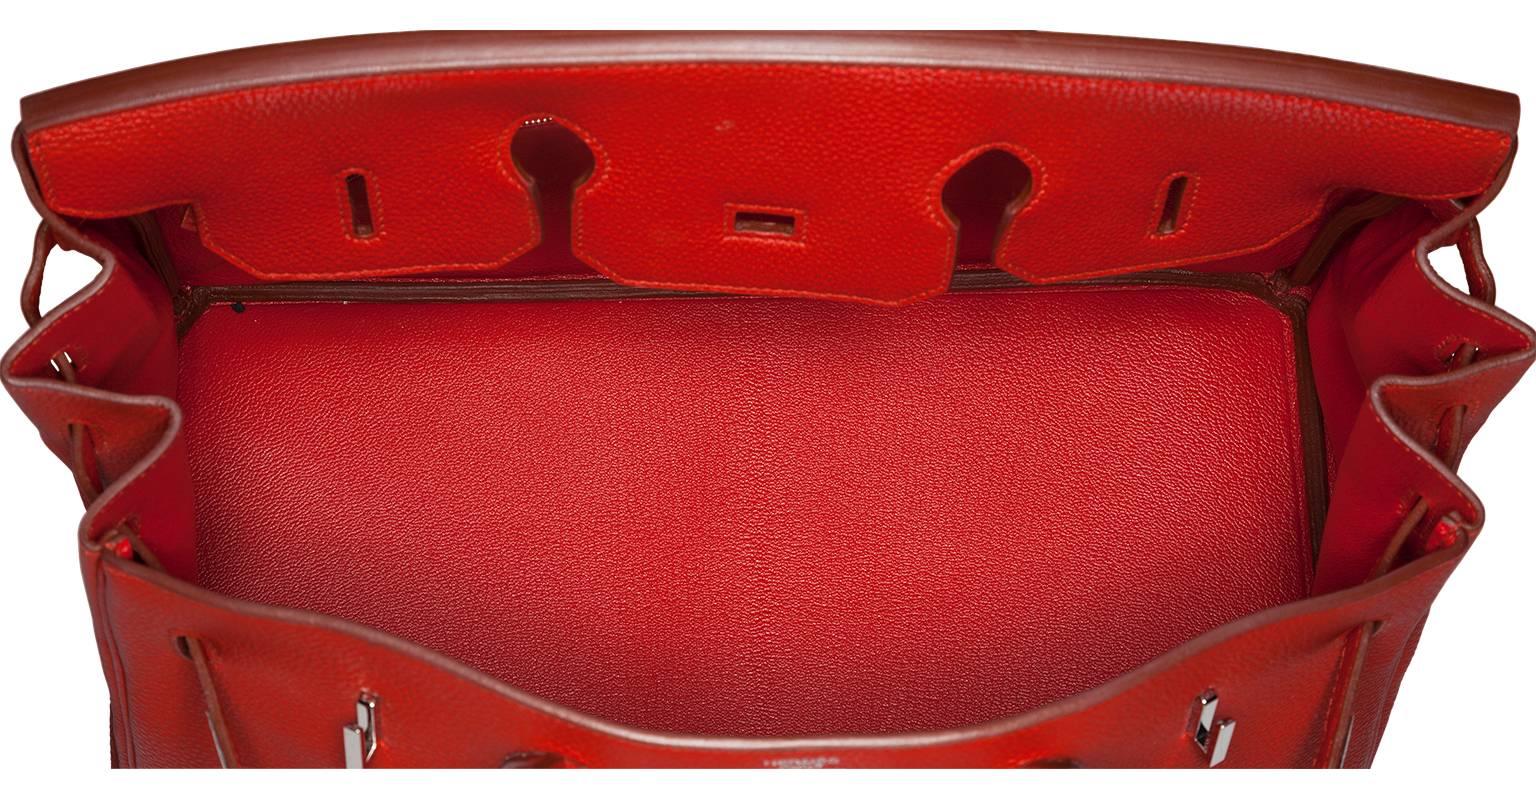 Hermes 35cm Rouge Garance Togo Leather Birkin Bag with Palladium Hardware 1